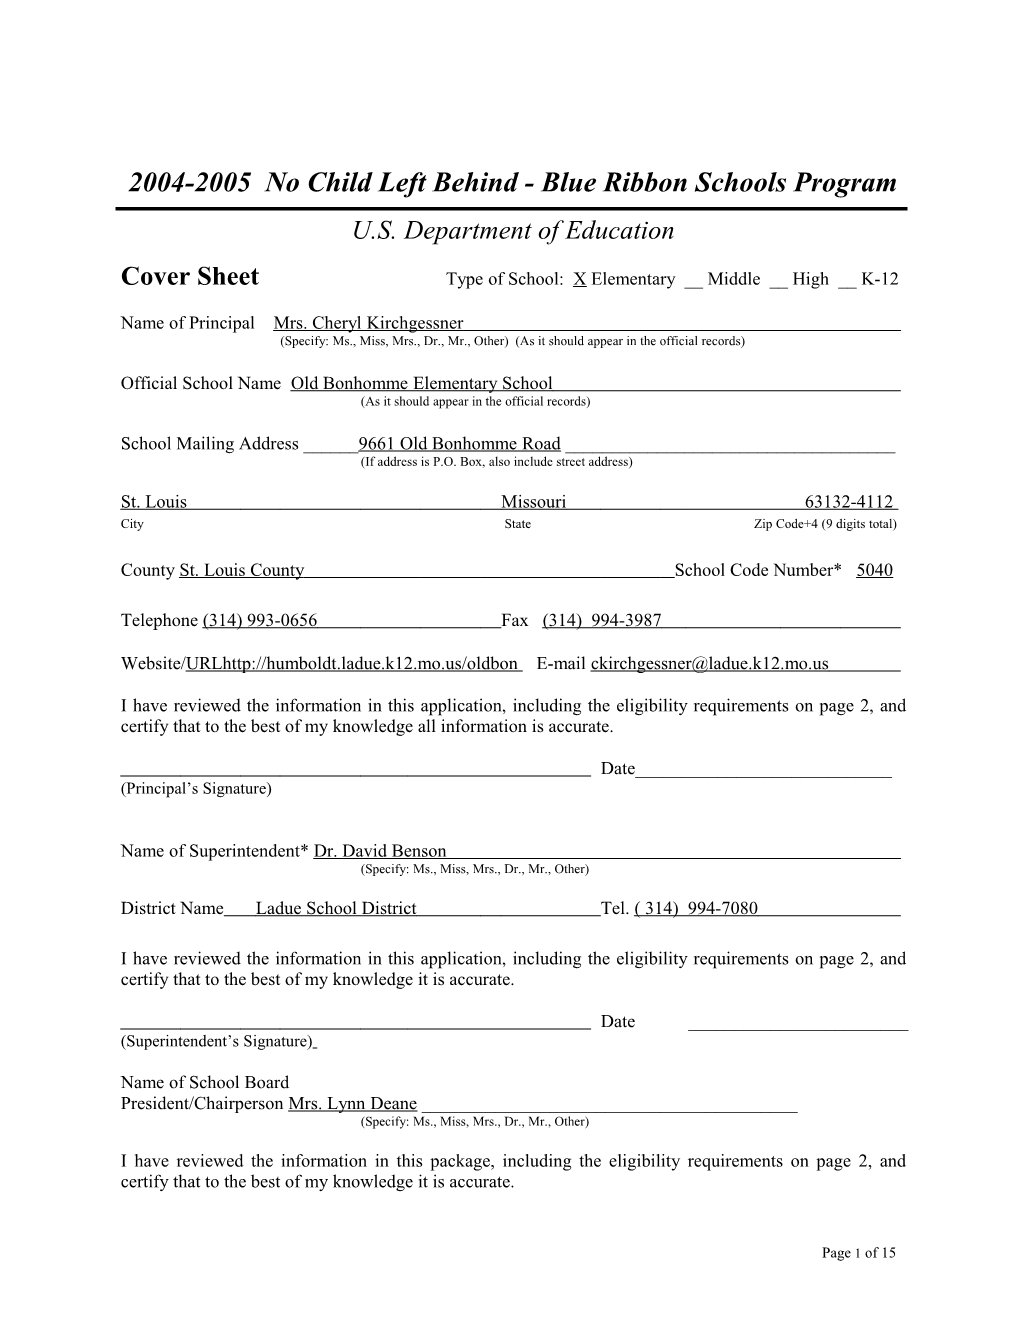 Old Bonhomme Elementary School Application: 2004-2005, No Child Left Behind - Blue Ribbon